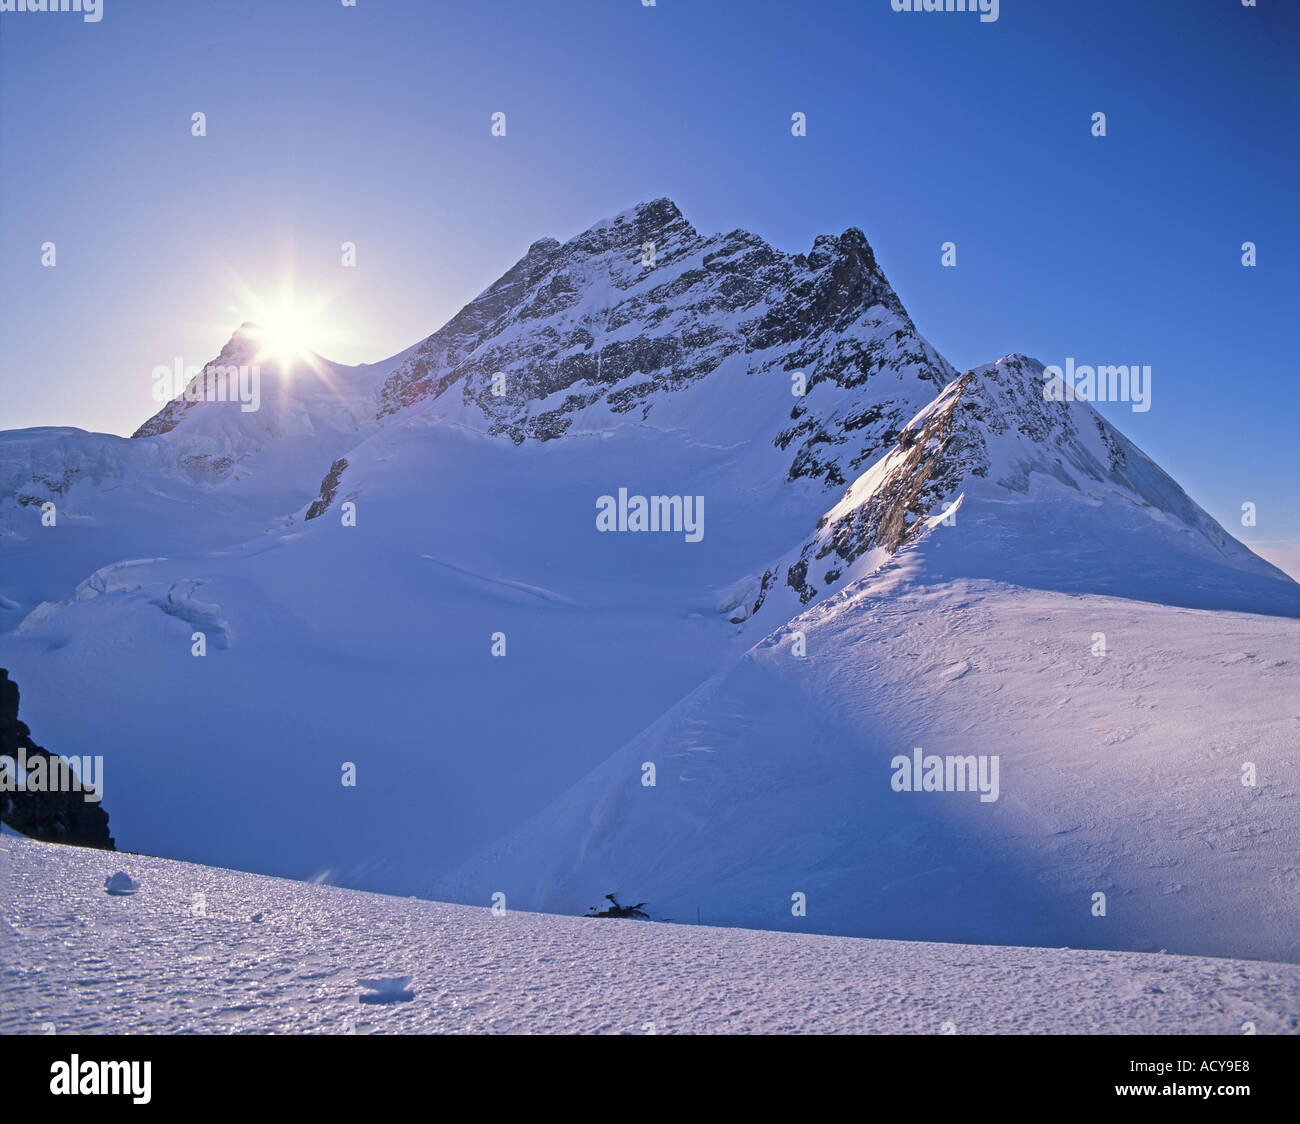 Switzerland swiss alps Jungfrau plateau Top of europe 13642ft Stock Photo